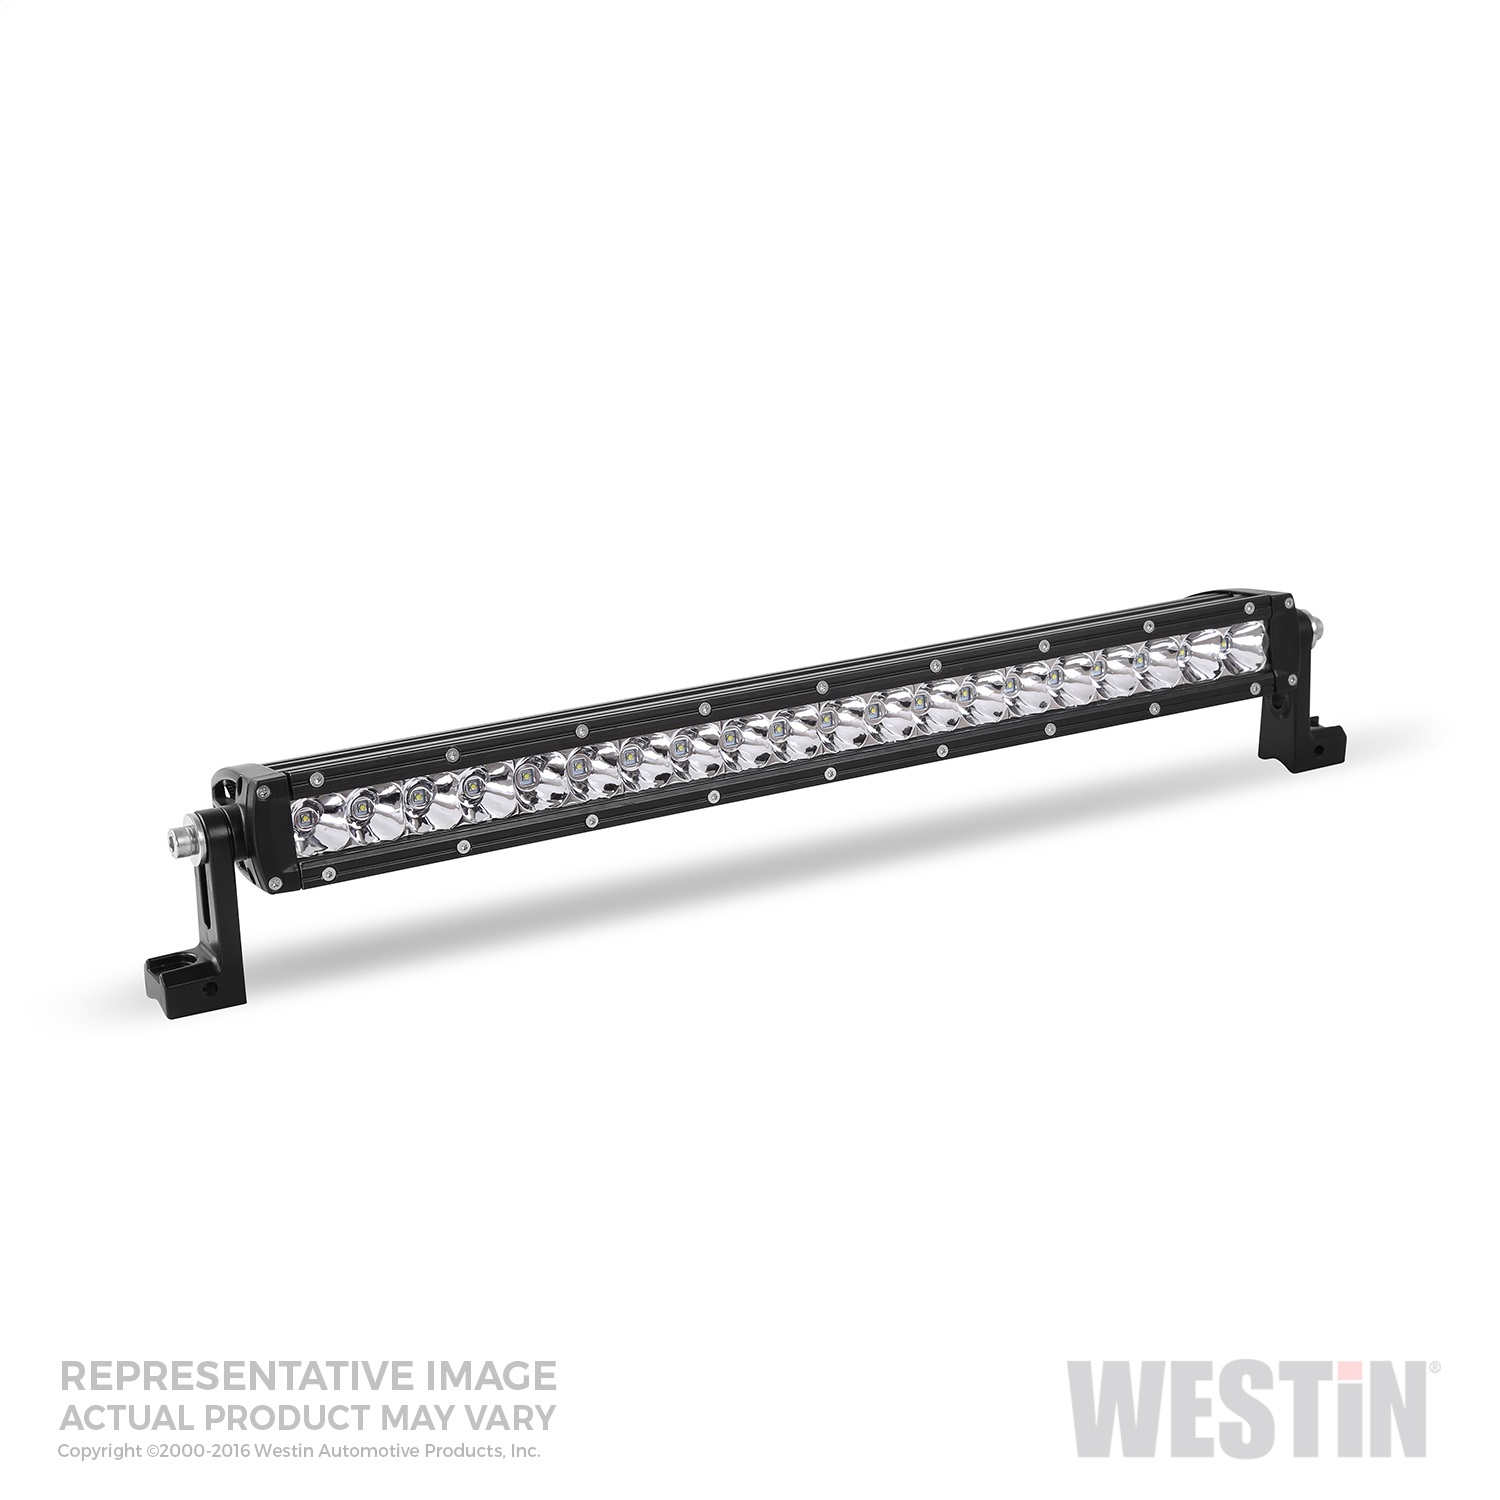 Westin 09-12270-30S Xtreme Single Row LED Light Bar